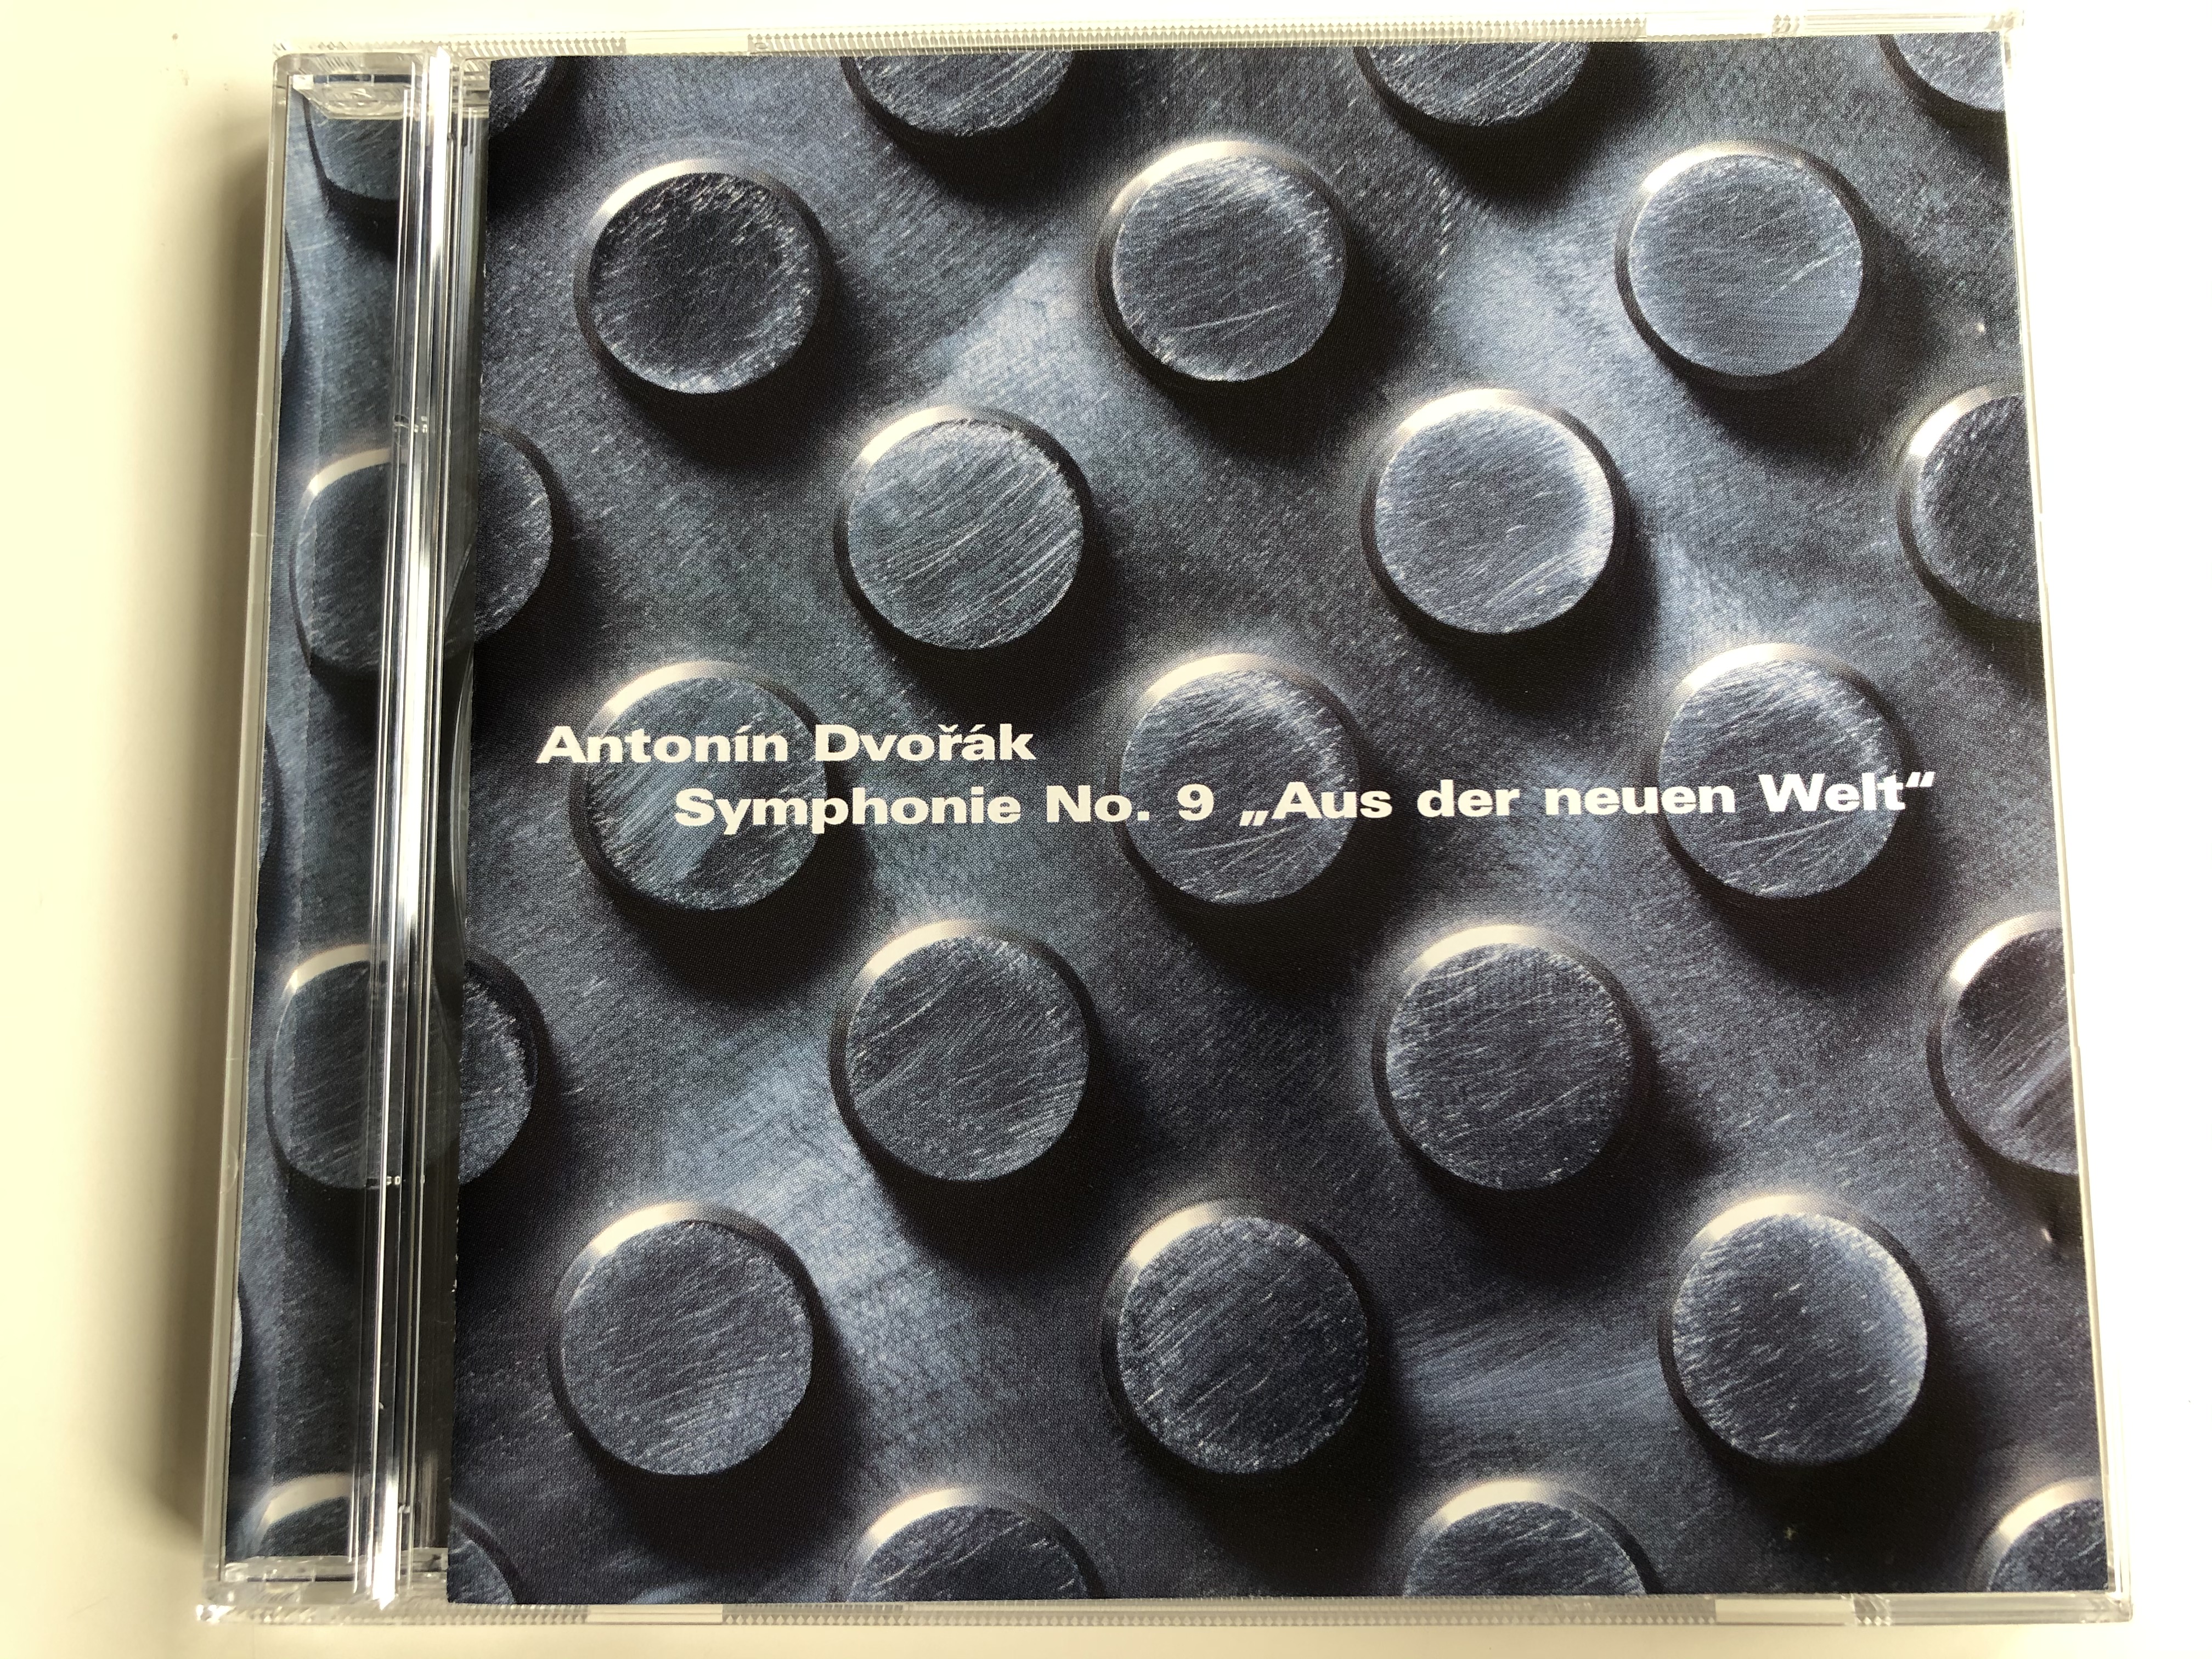 anton-n-dvo-k-symphonie-no.-9-aus-der-neuen-welt-arte-nova-classics-audio-cd-1995-74321-64189-2-1-.jpg